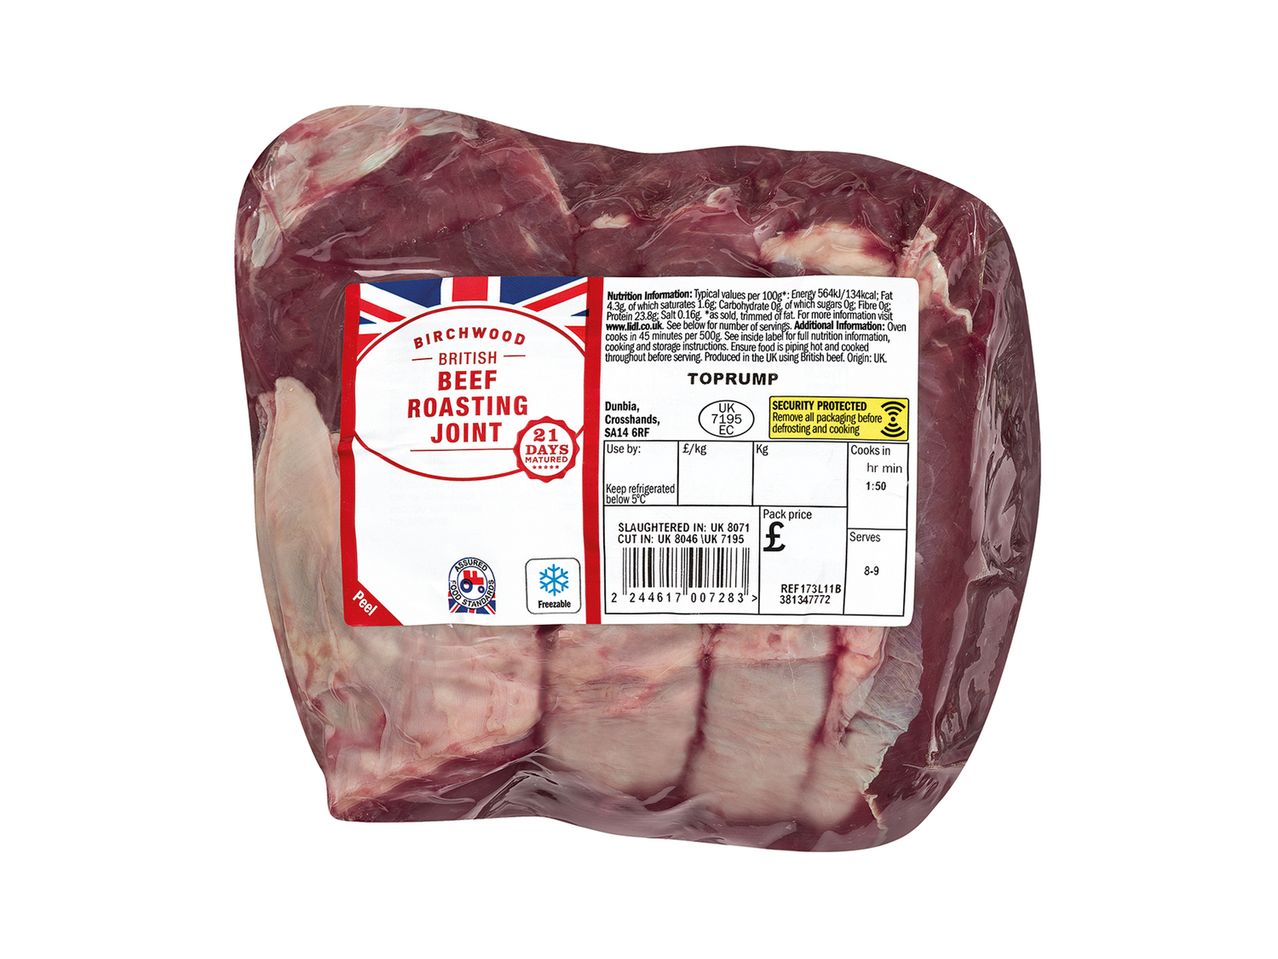 Go to full screen view: Birchwood British Beef Roasting Joint - Image 1